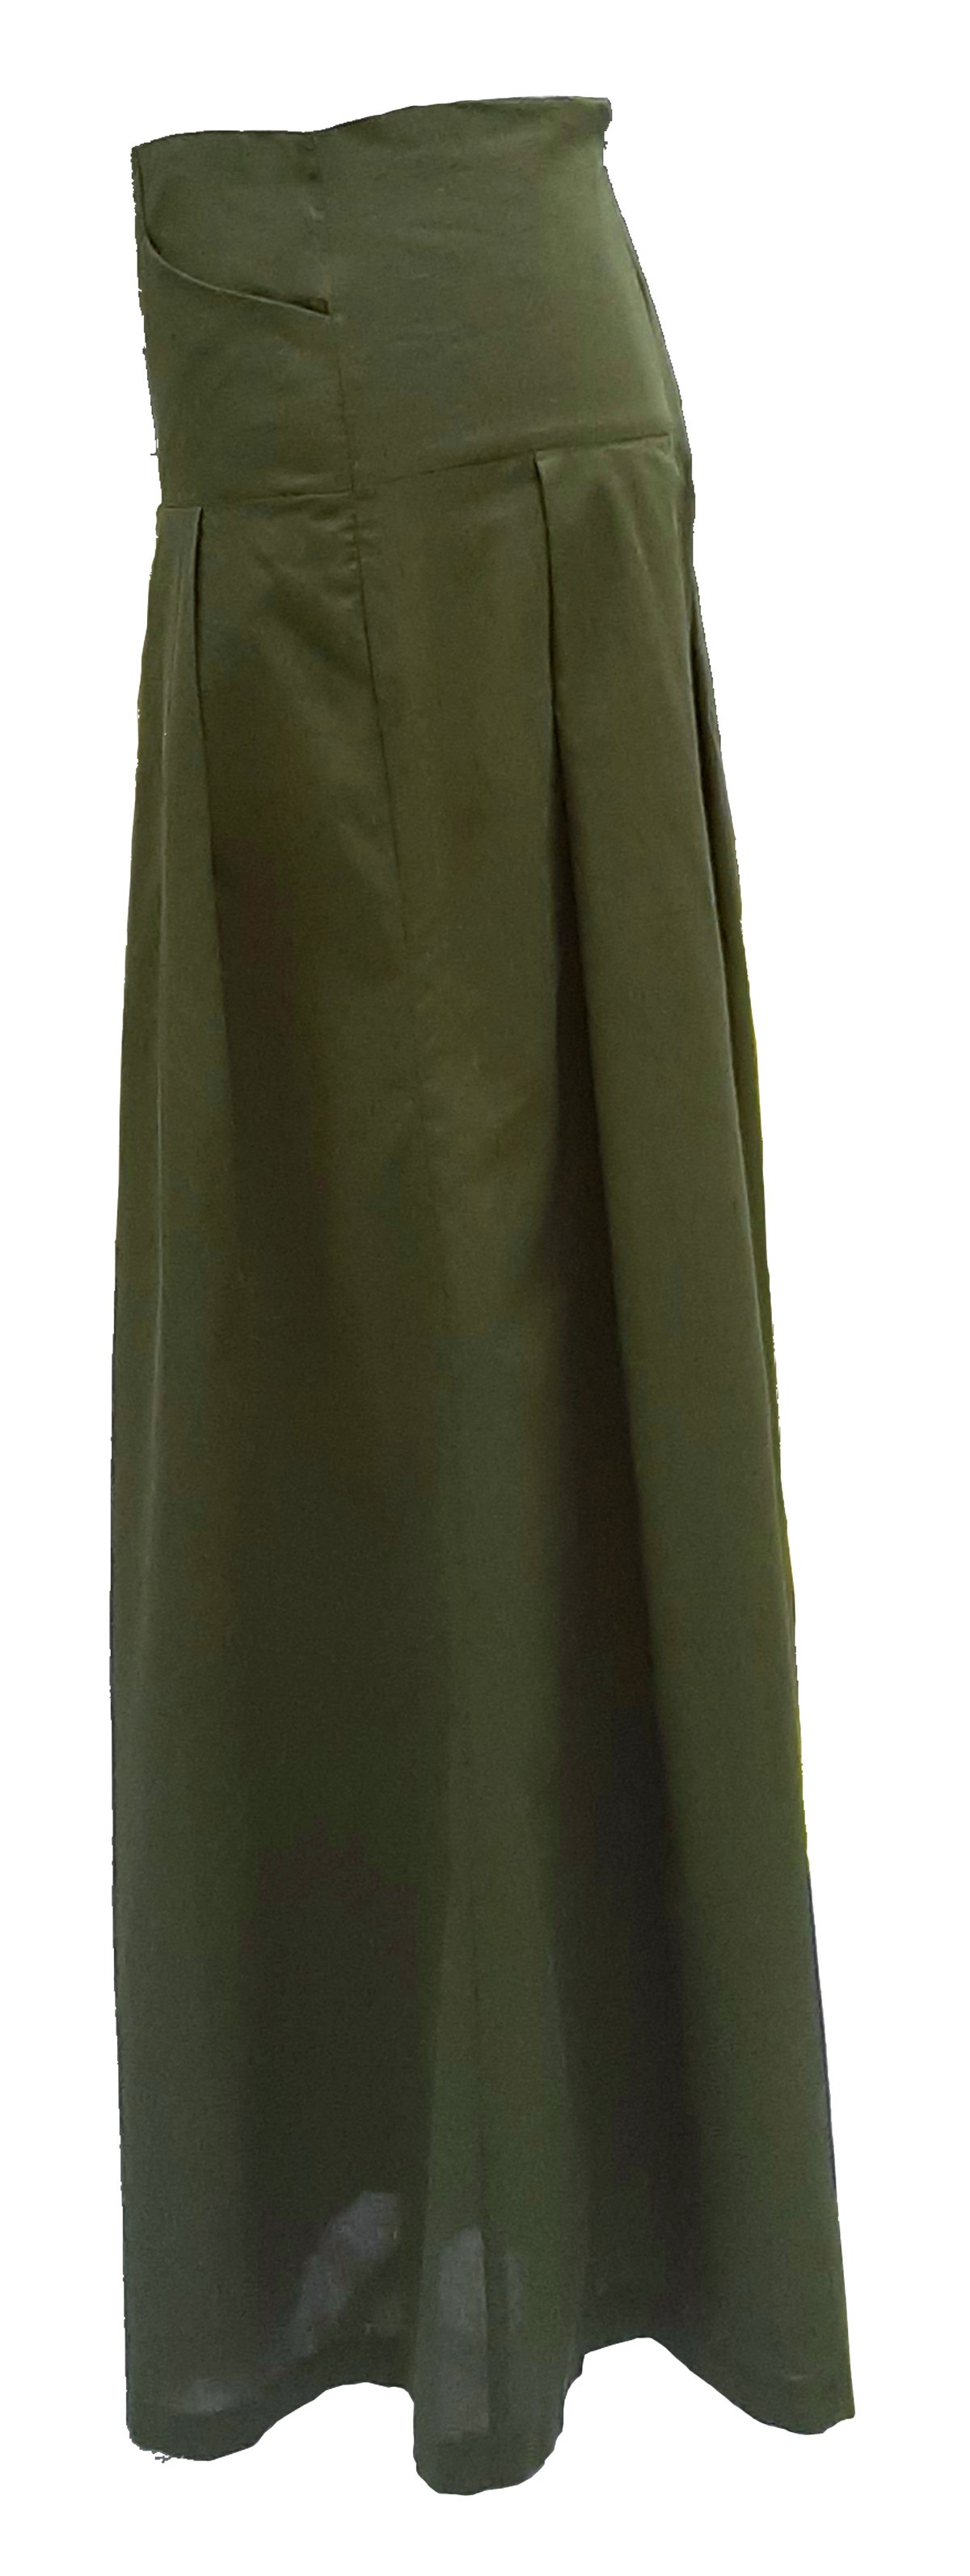 Image of Karacha pants in Olive